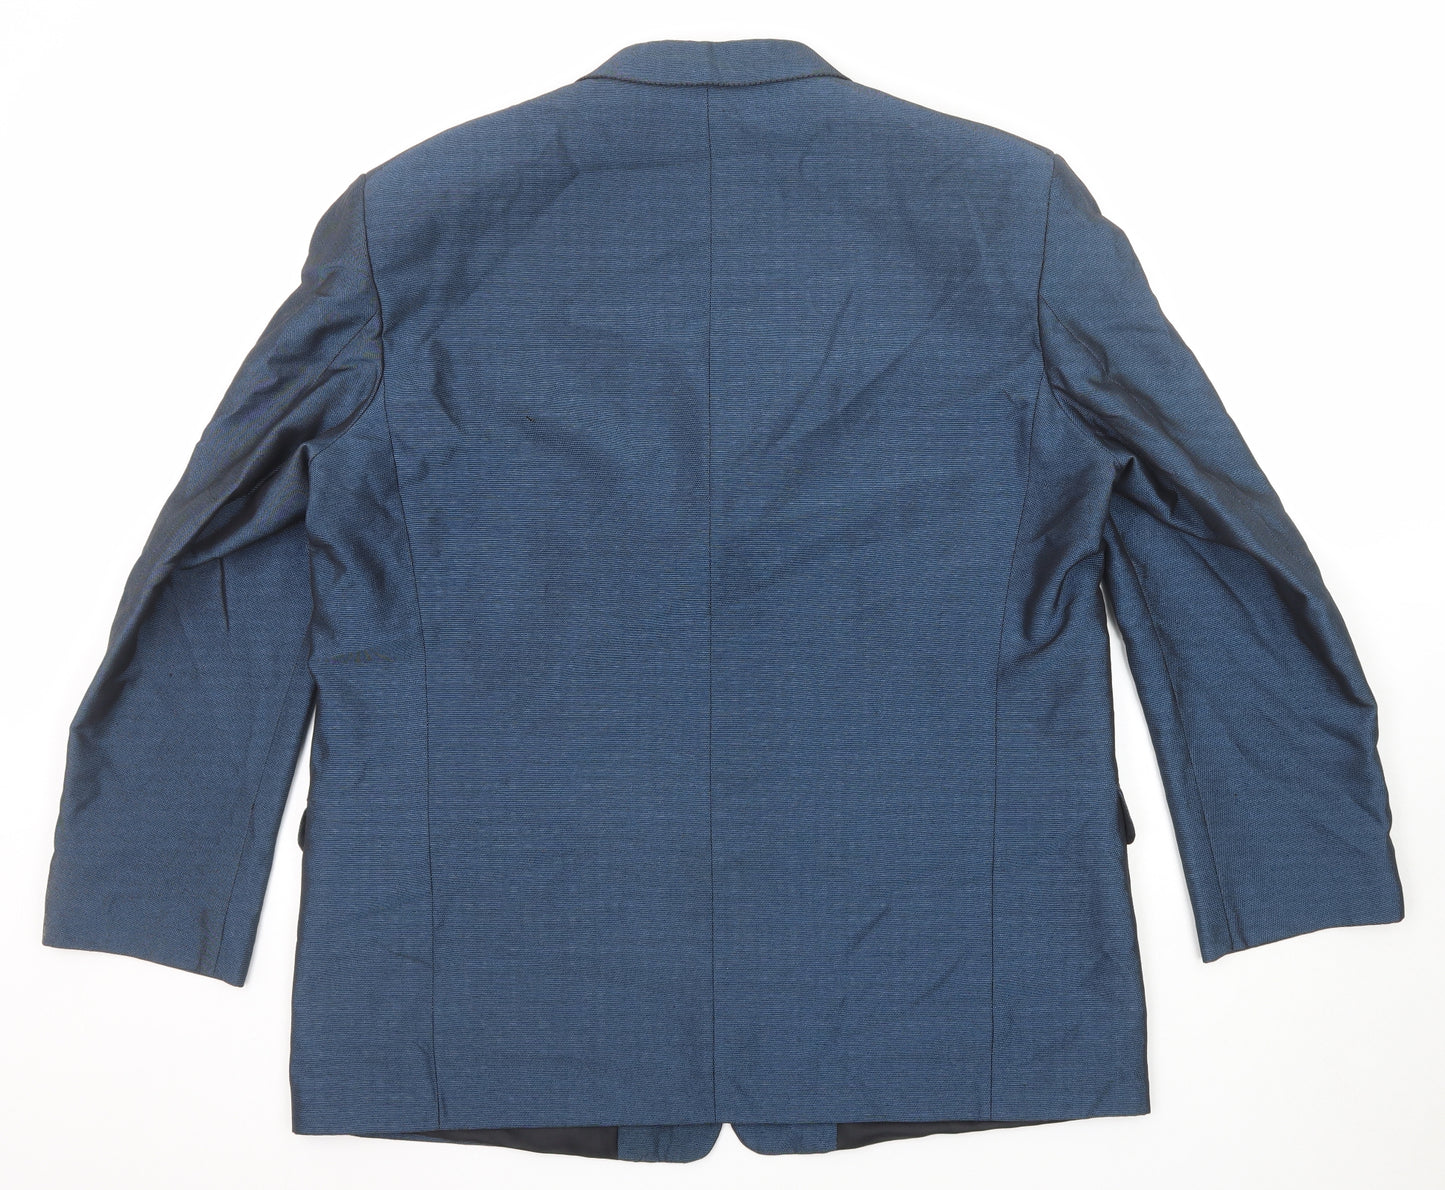 Emporium Mens Blue Polyester Jacket Suit Jacket Size 46 Regular